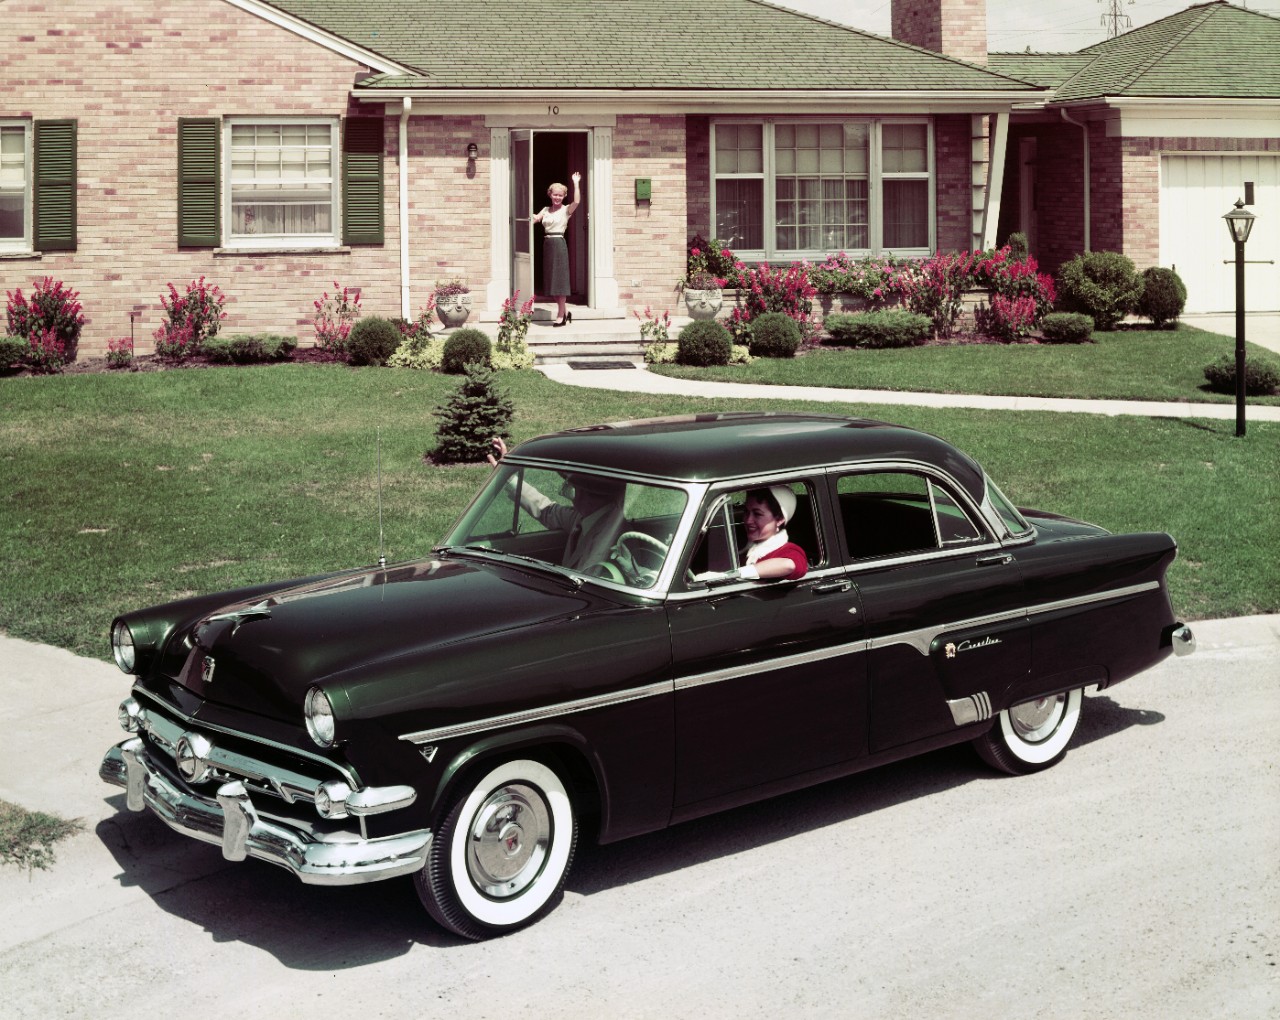 1954 Ford Crestline four-door